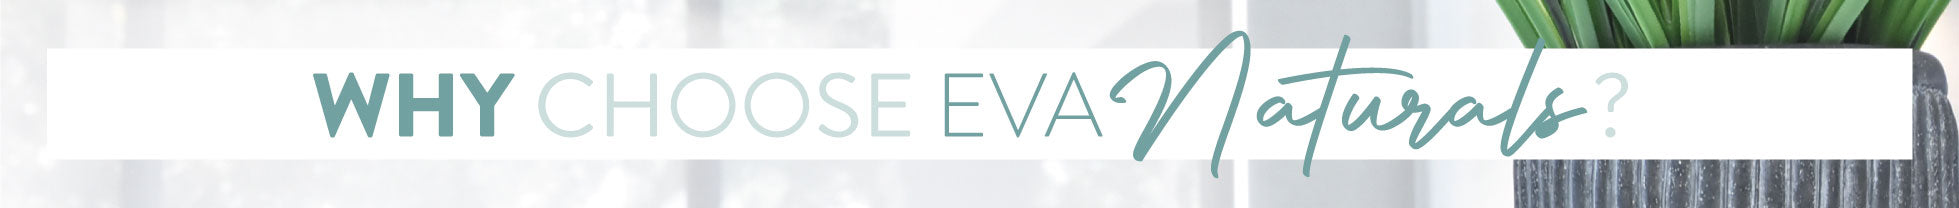 Why to choose Eva Naturals